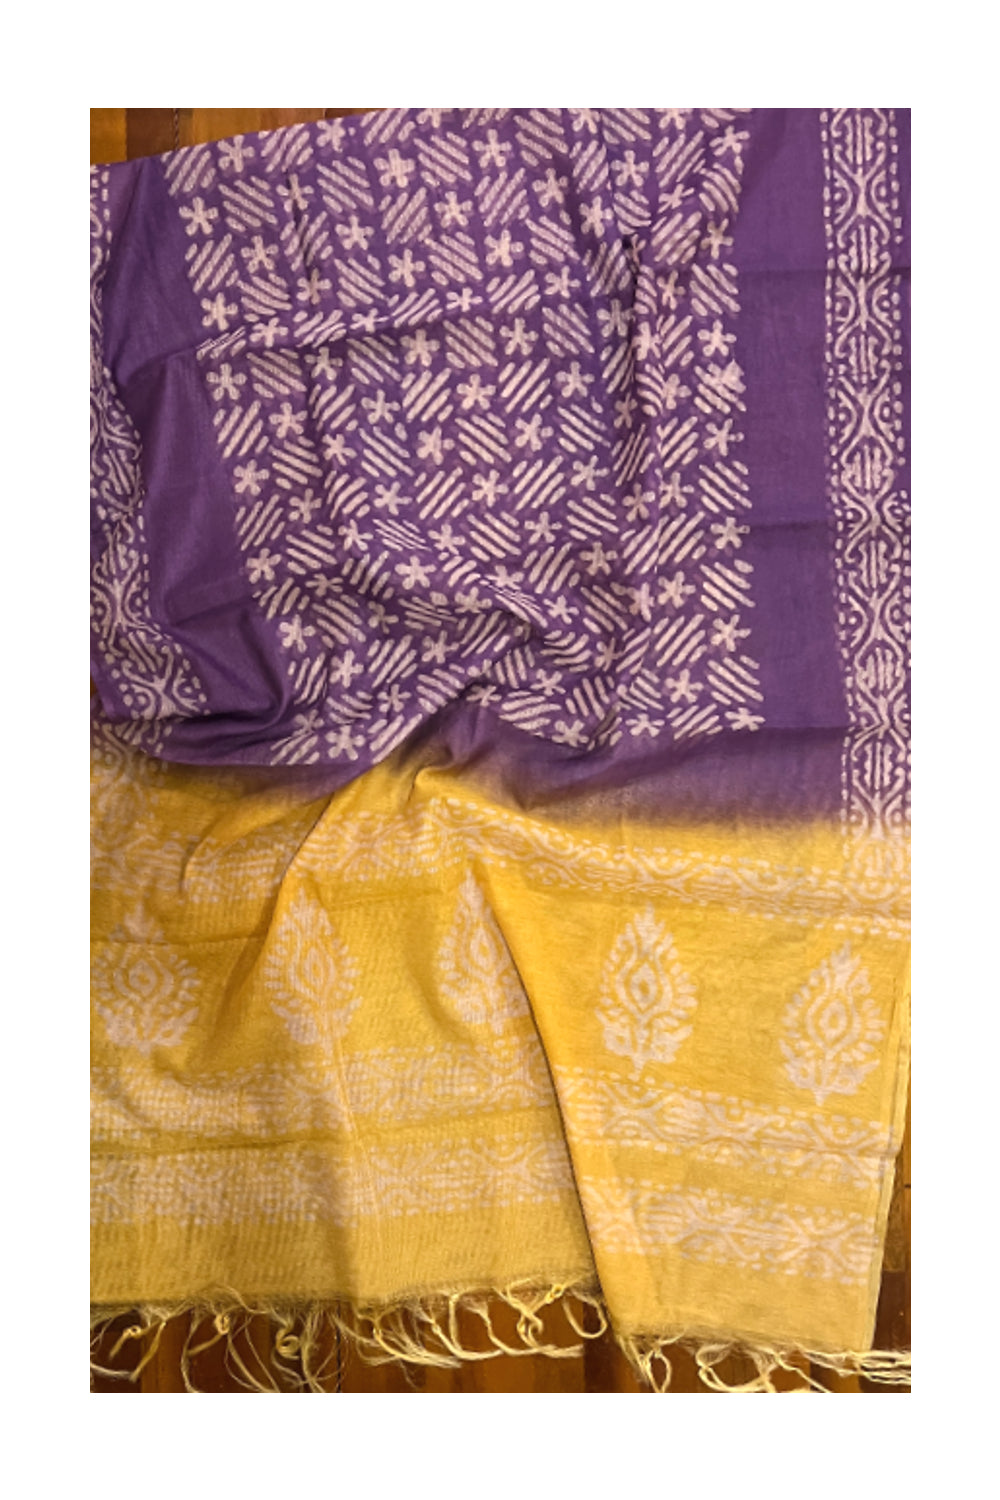 Southloom™ Kota Churidar Salwar Suit Material in Yellow with Floral Prints